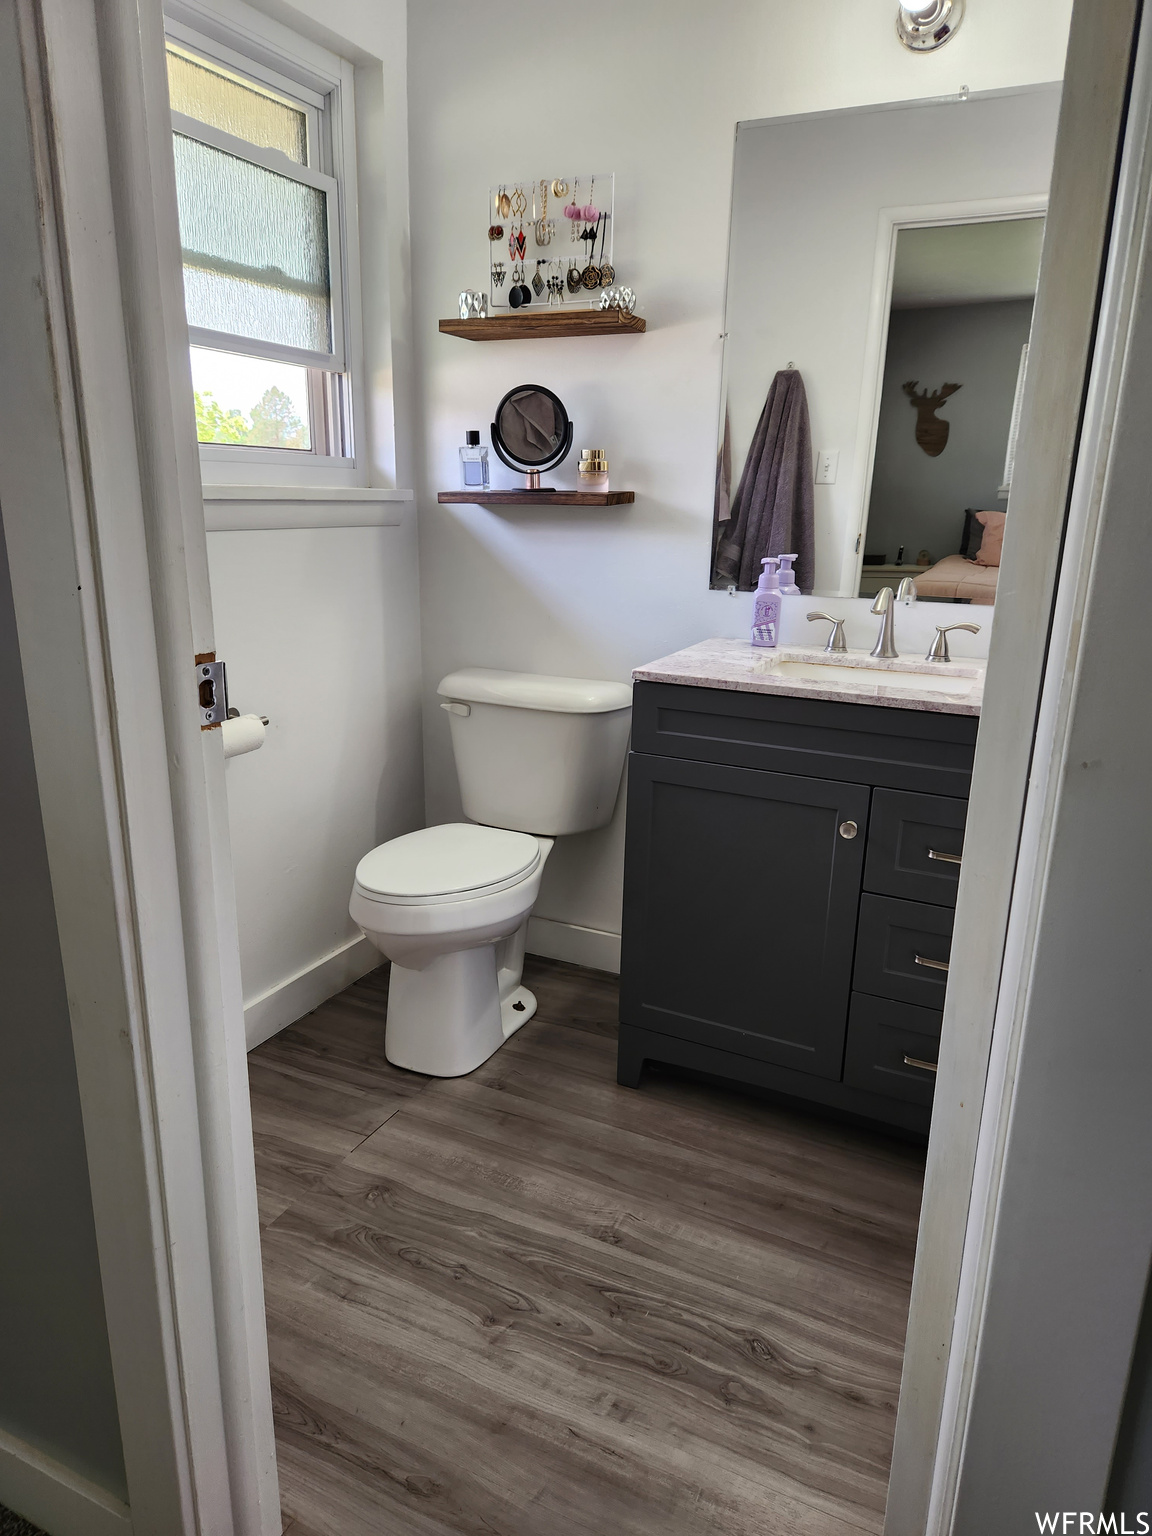 Bathroom with dark hardwood flooring, vanity, and mirror